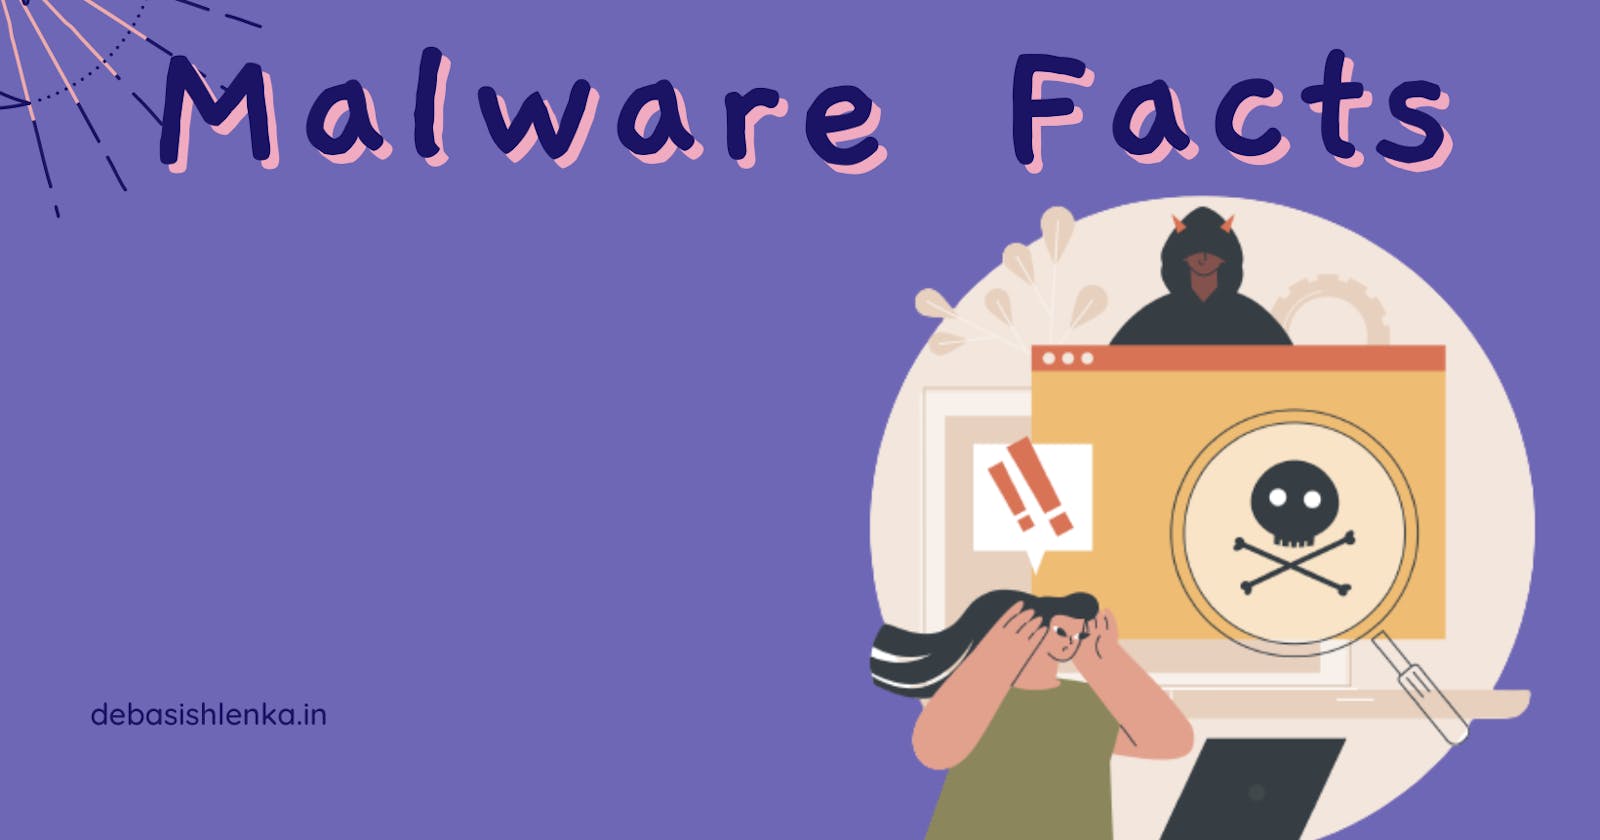 Malware Facts